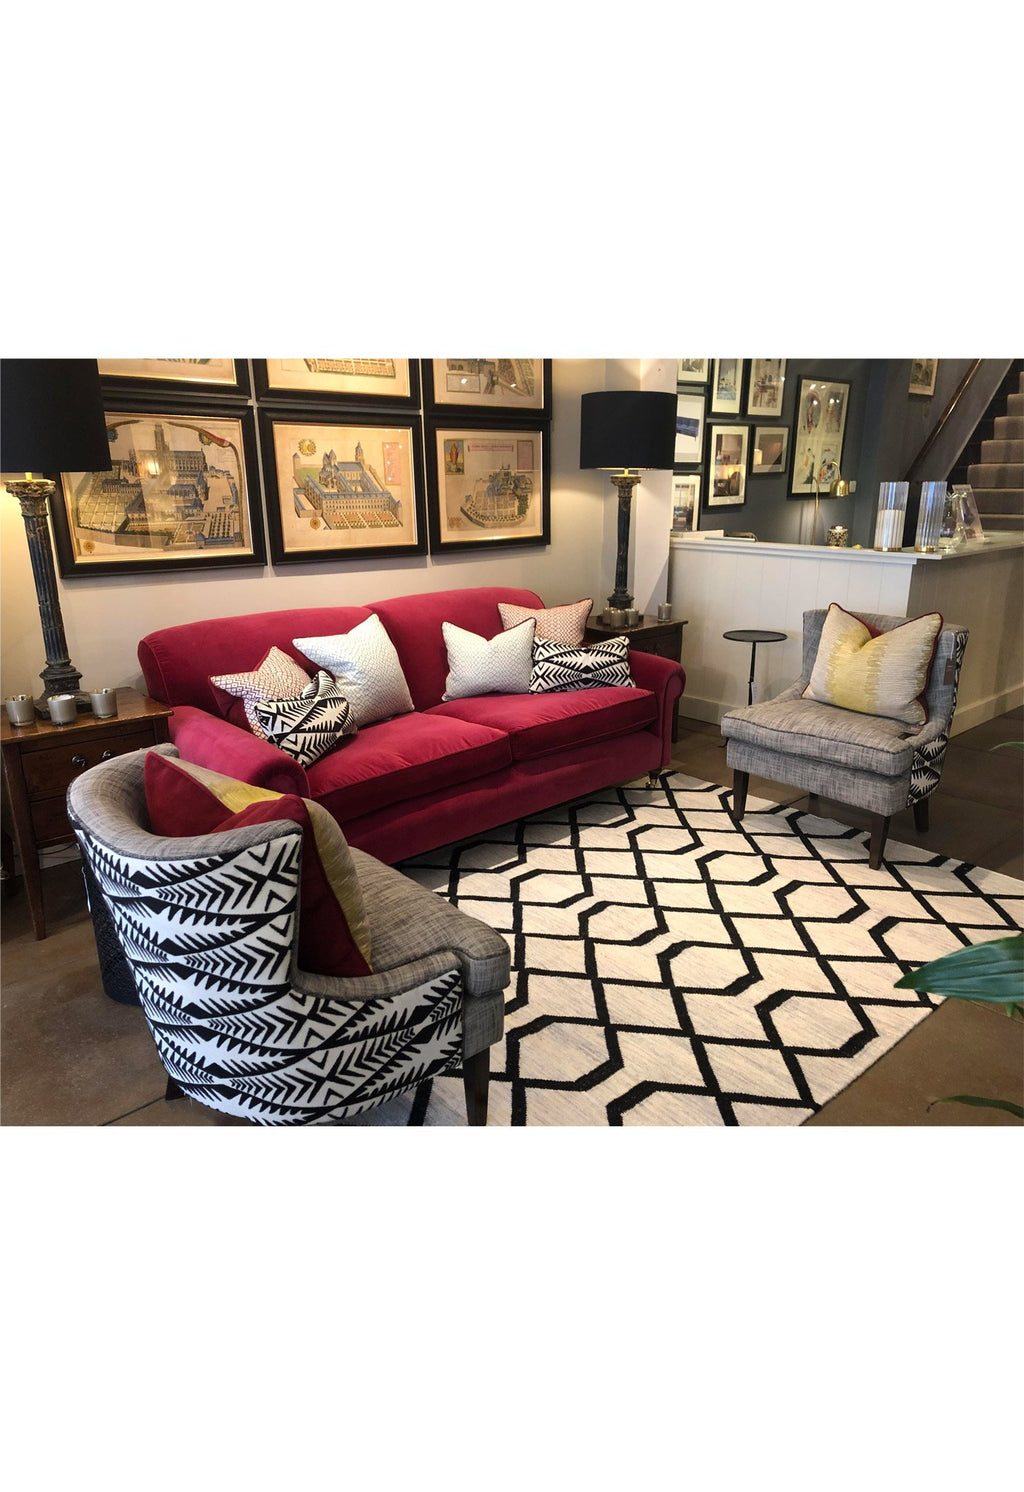 modern geometric rug in living room